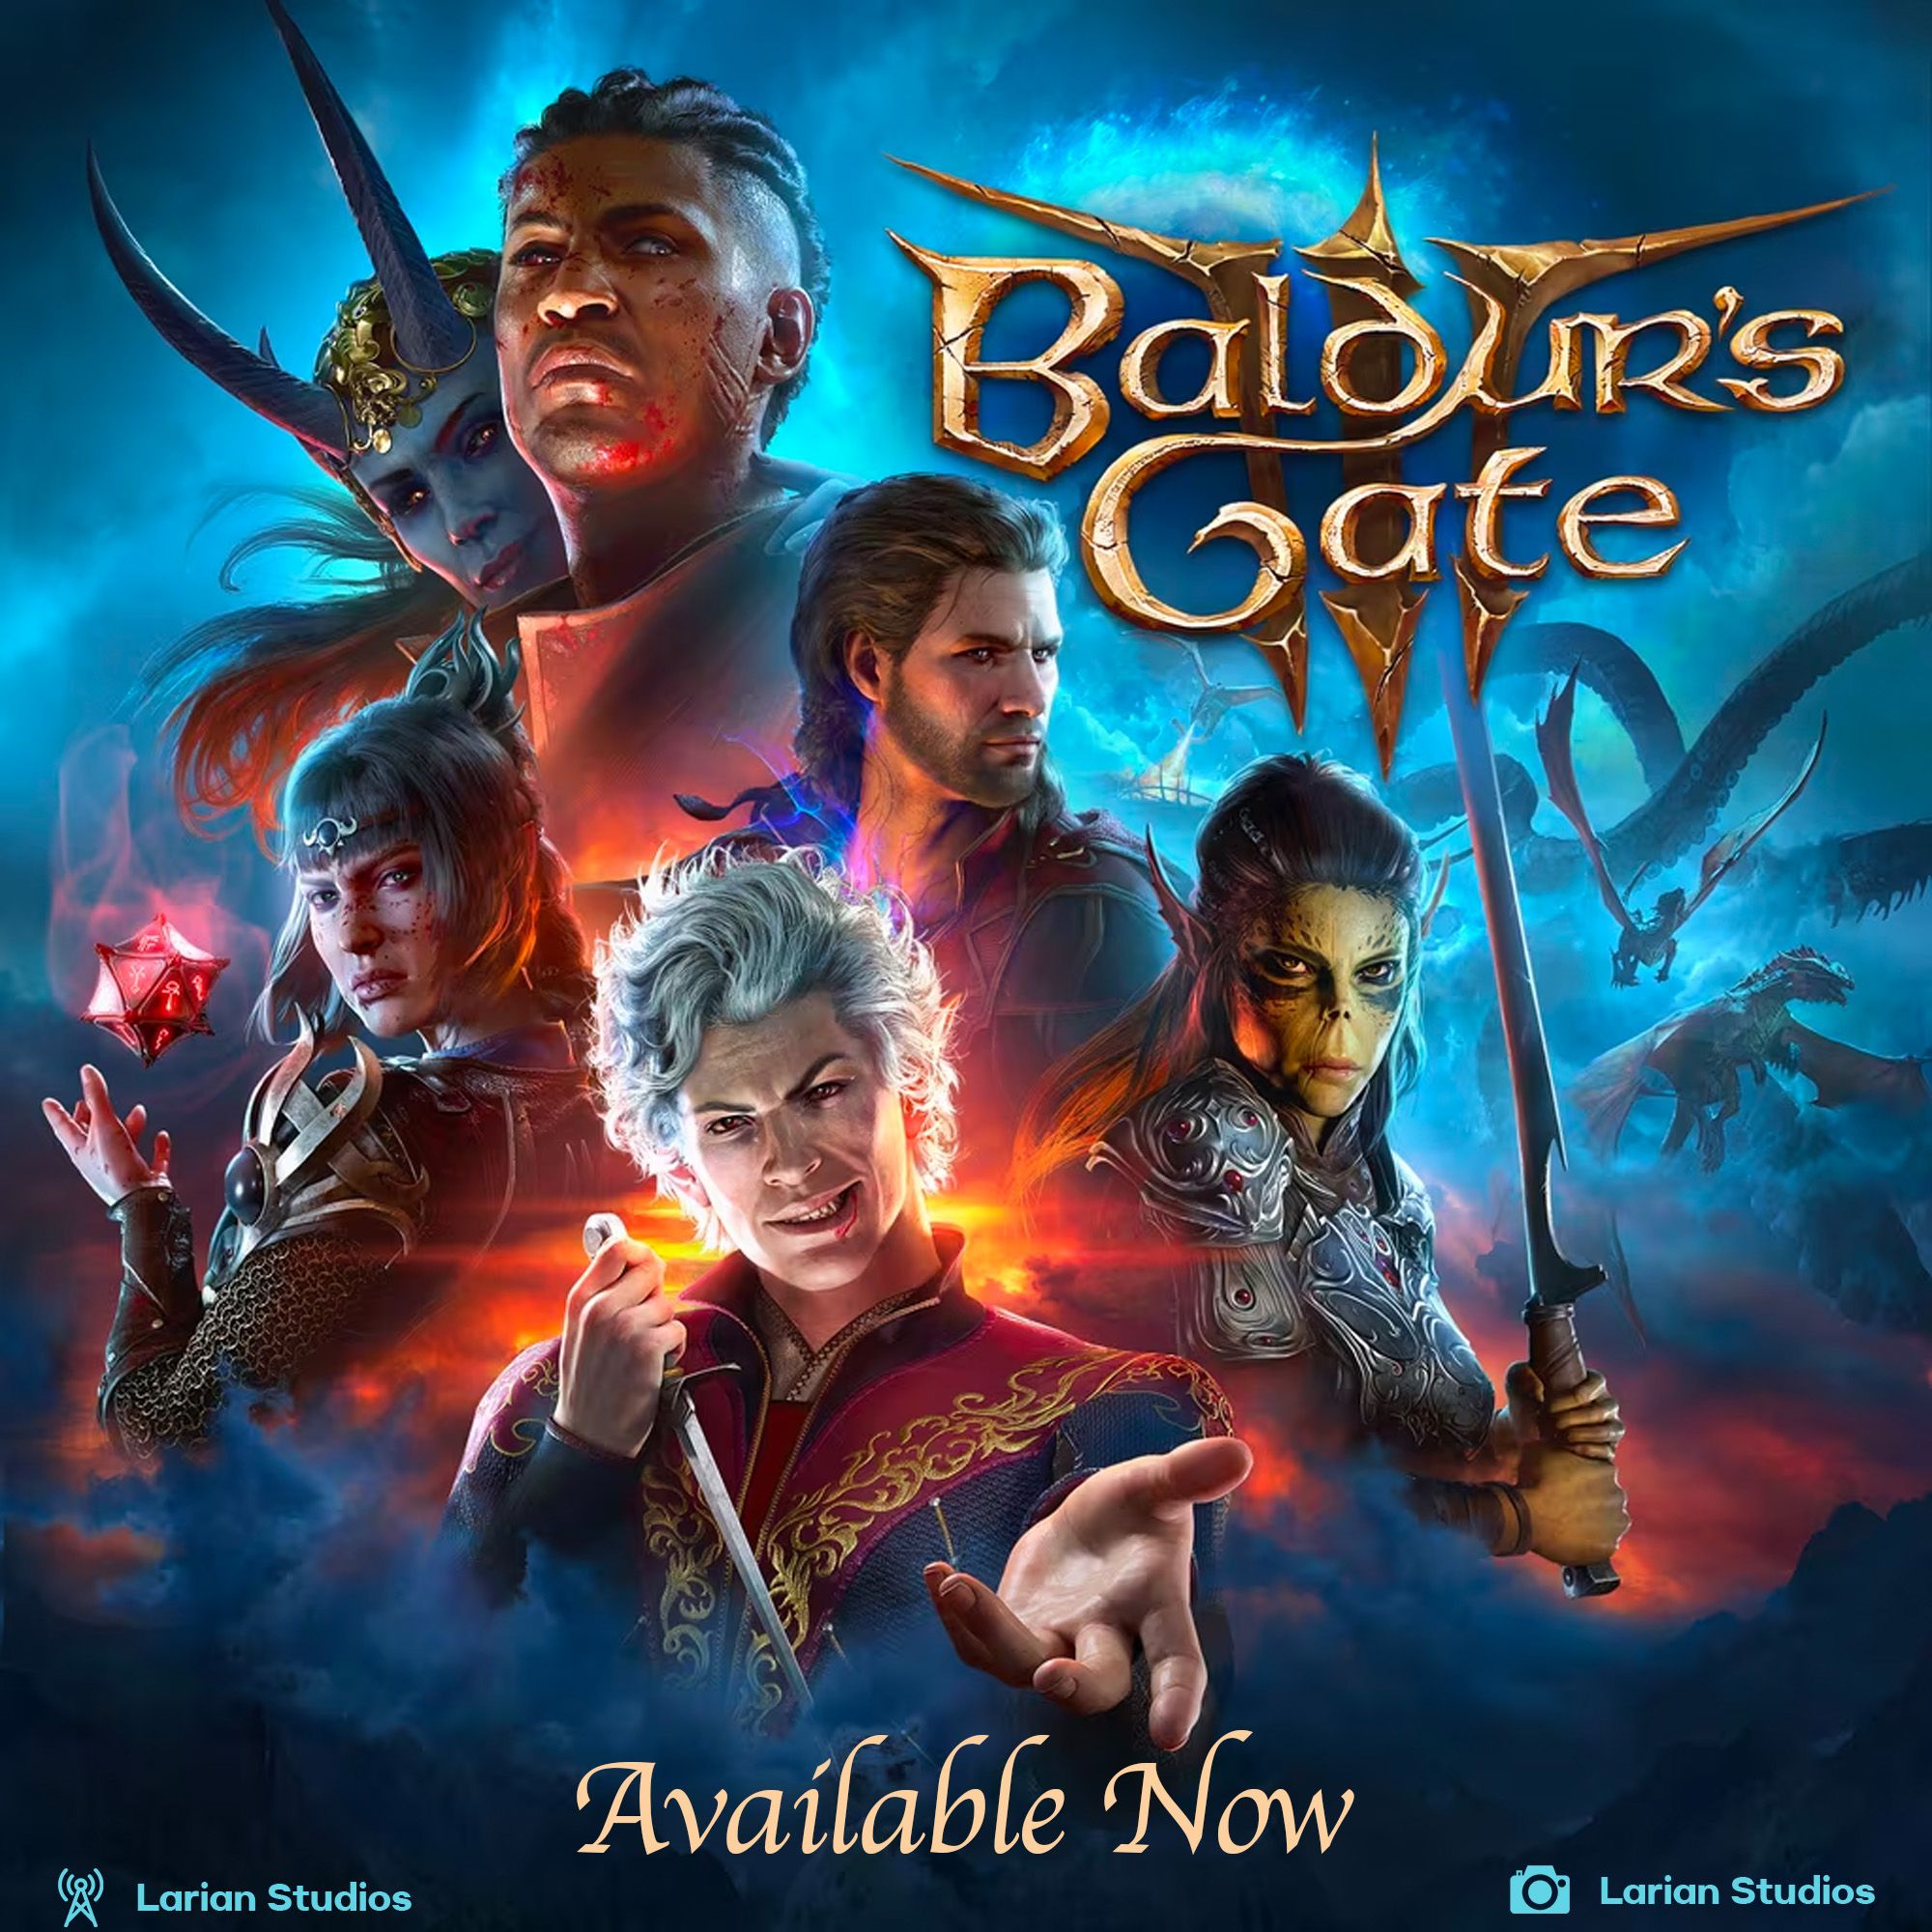 Baldurs Gate 3 is available now